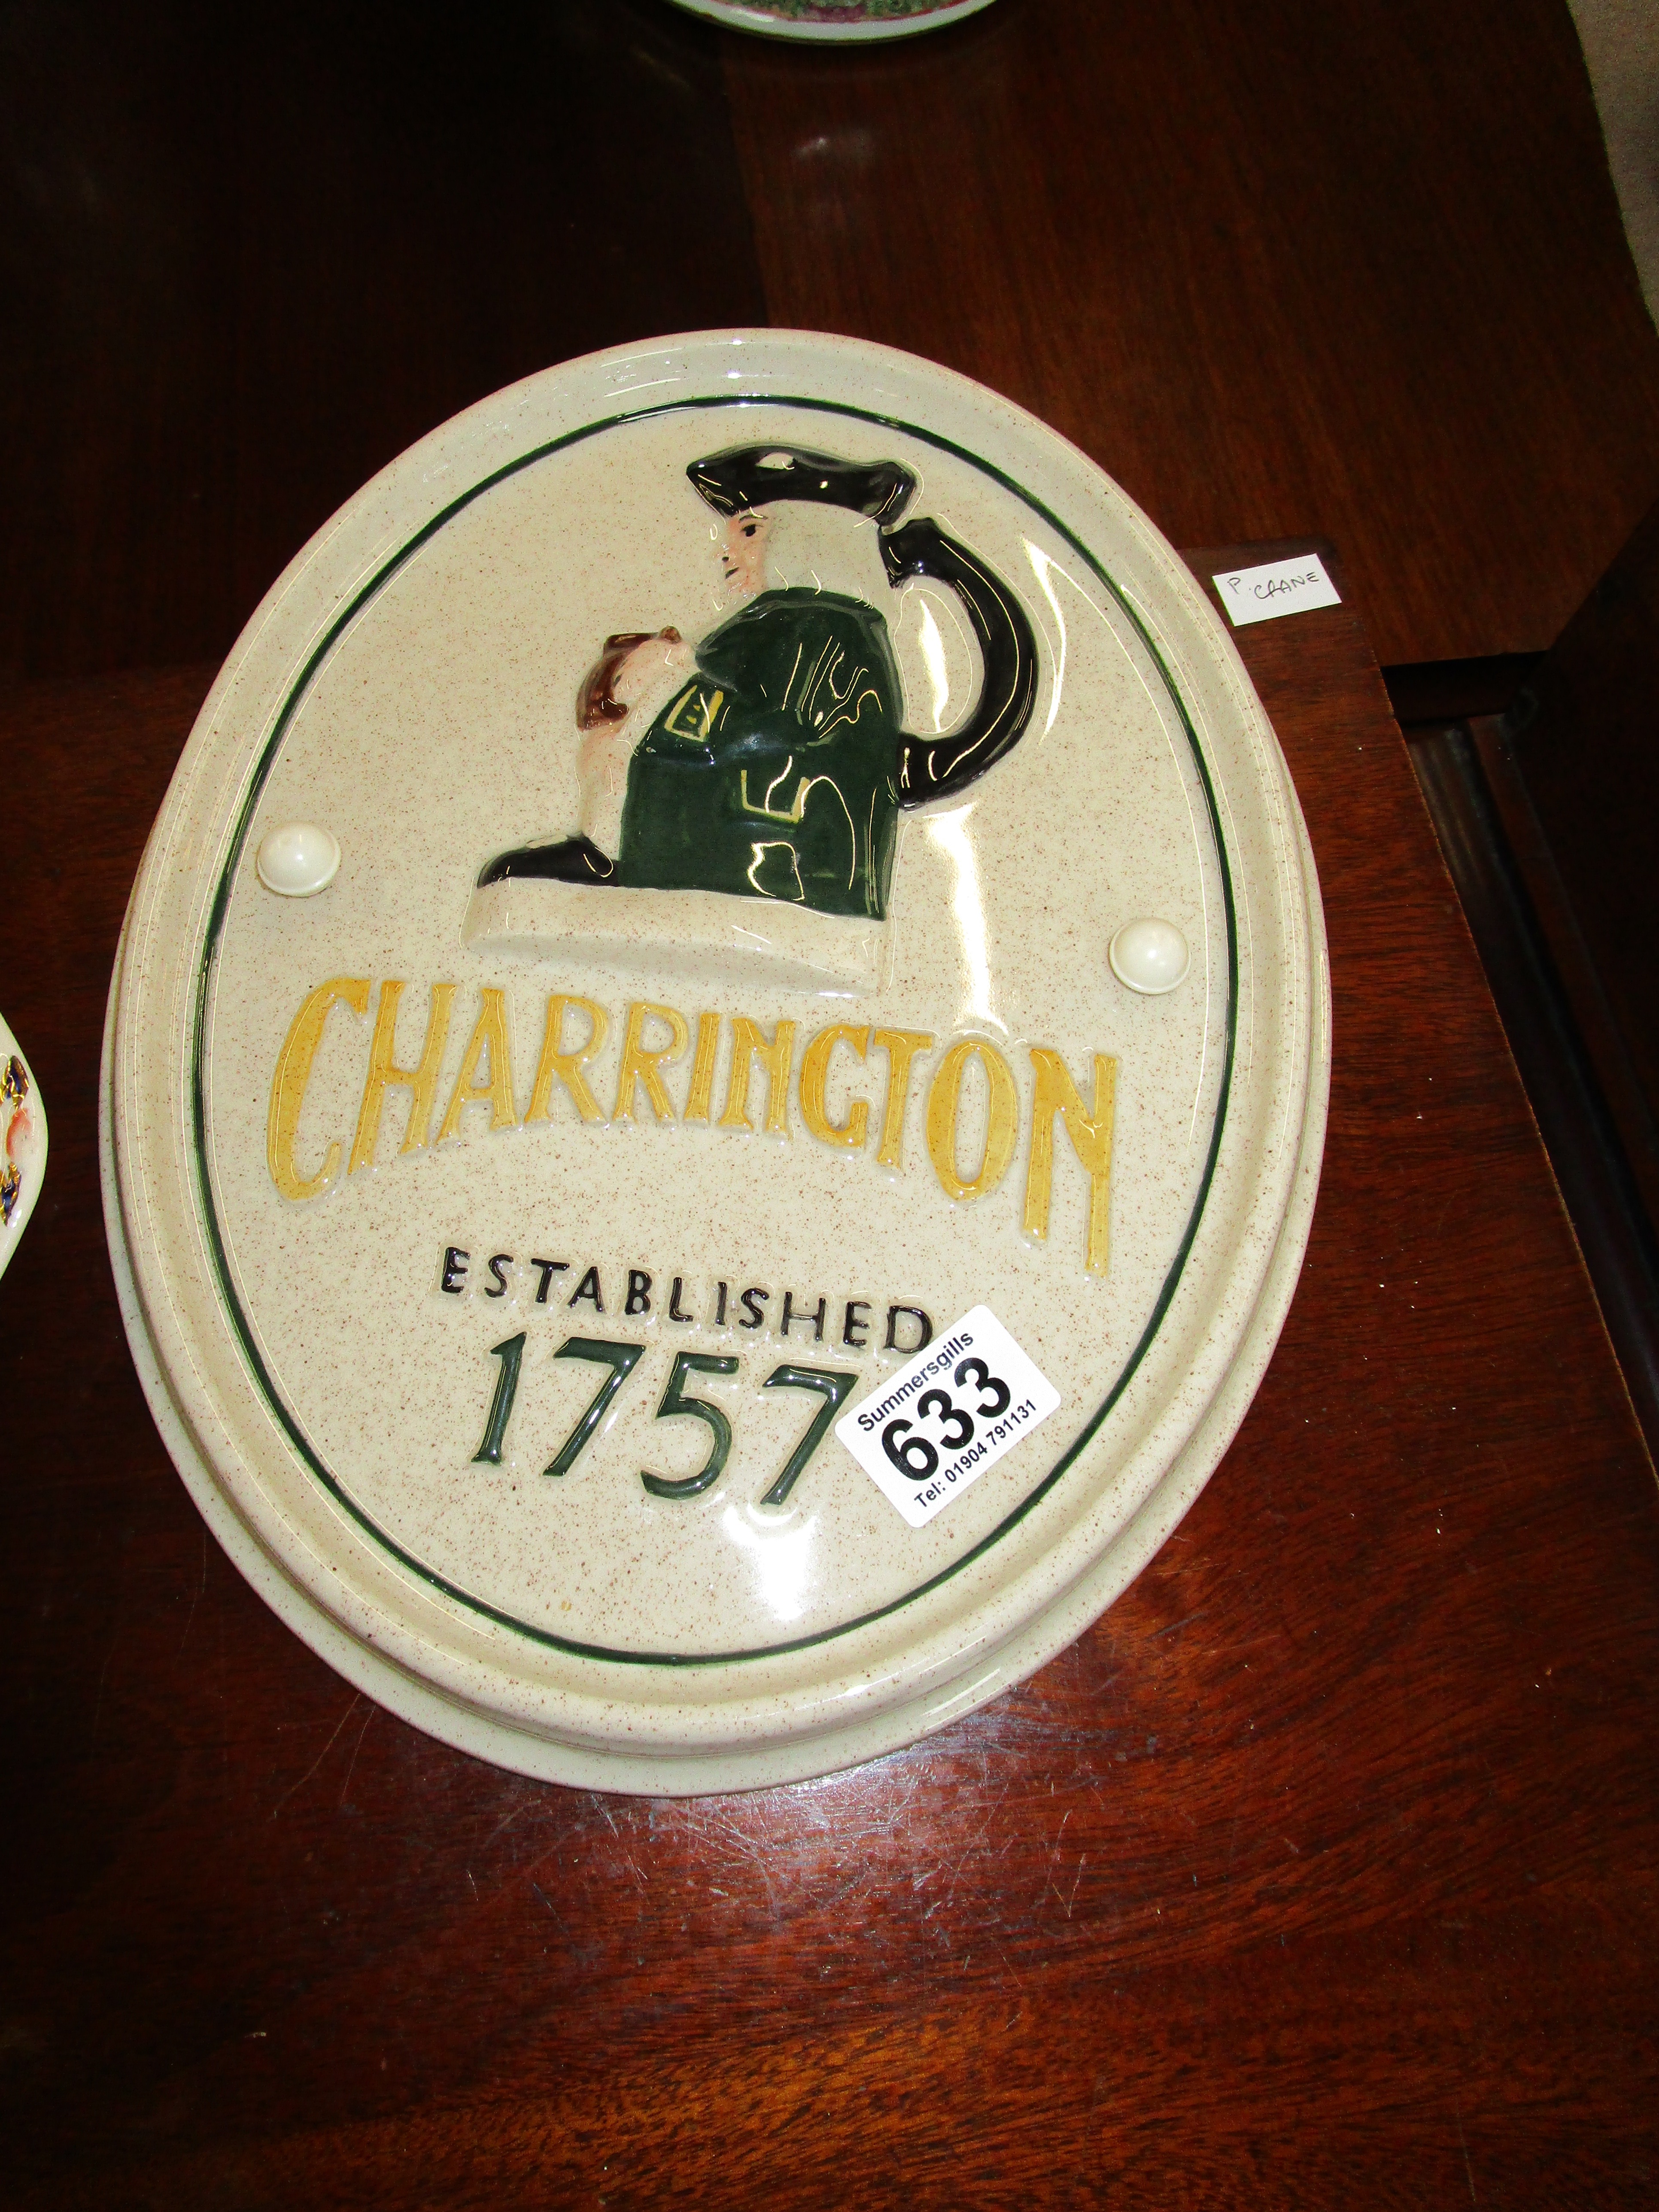 Charrington wall plaque